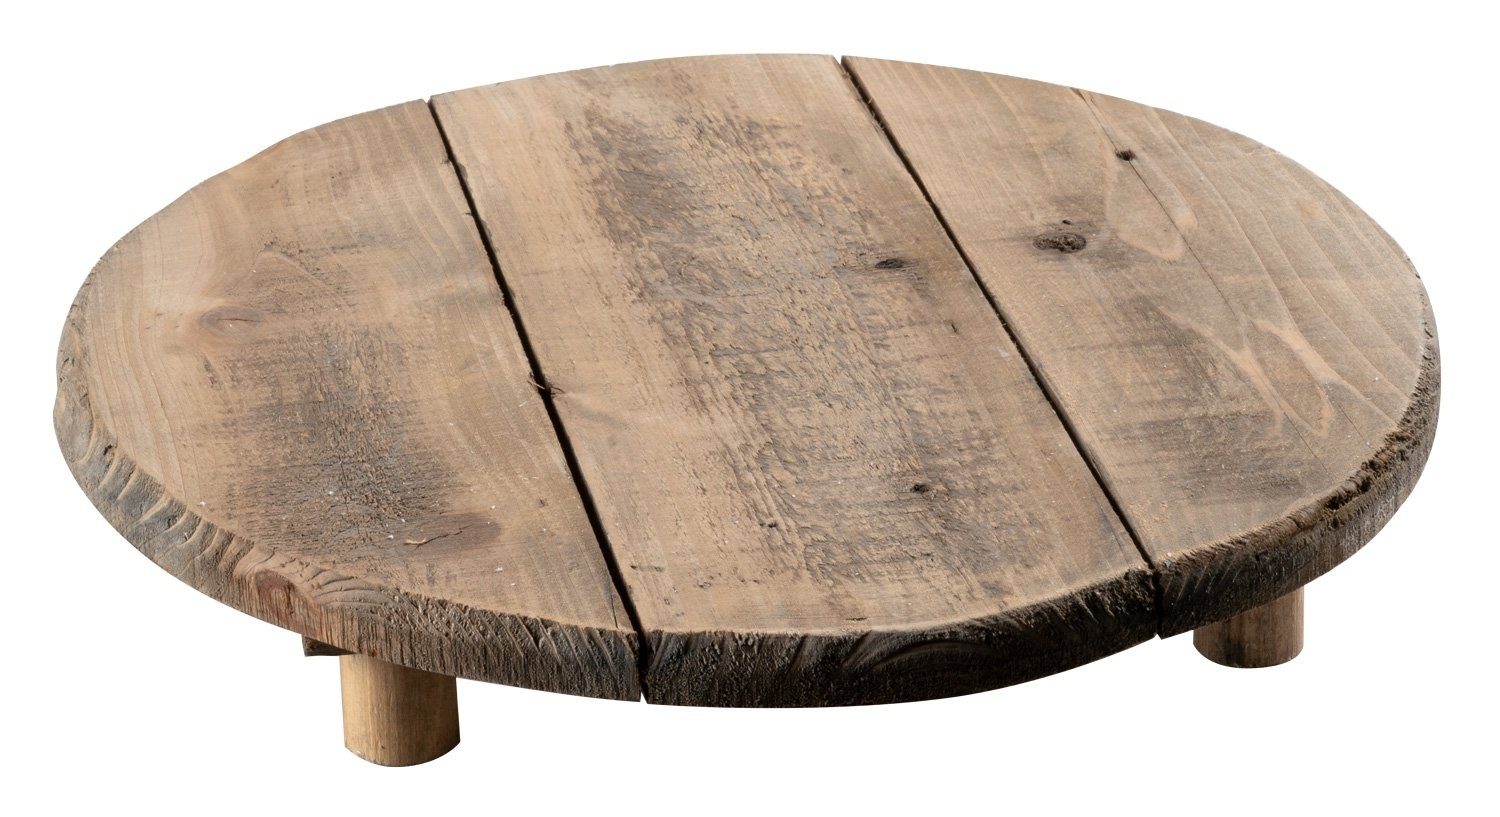 Tablett CHAMPO, braun, Holz, Ø 35 x H 6,5 cm, Füßen, mit Holz